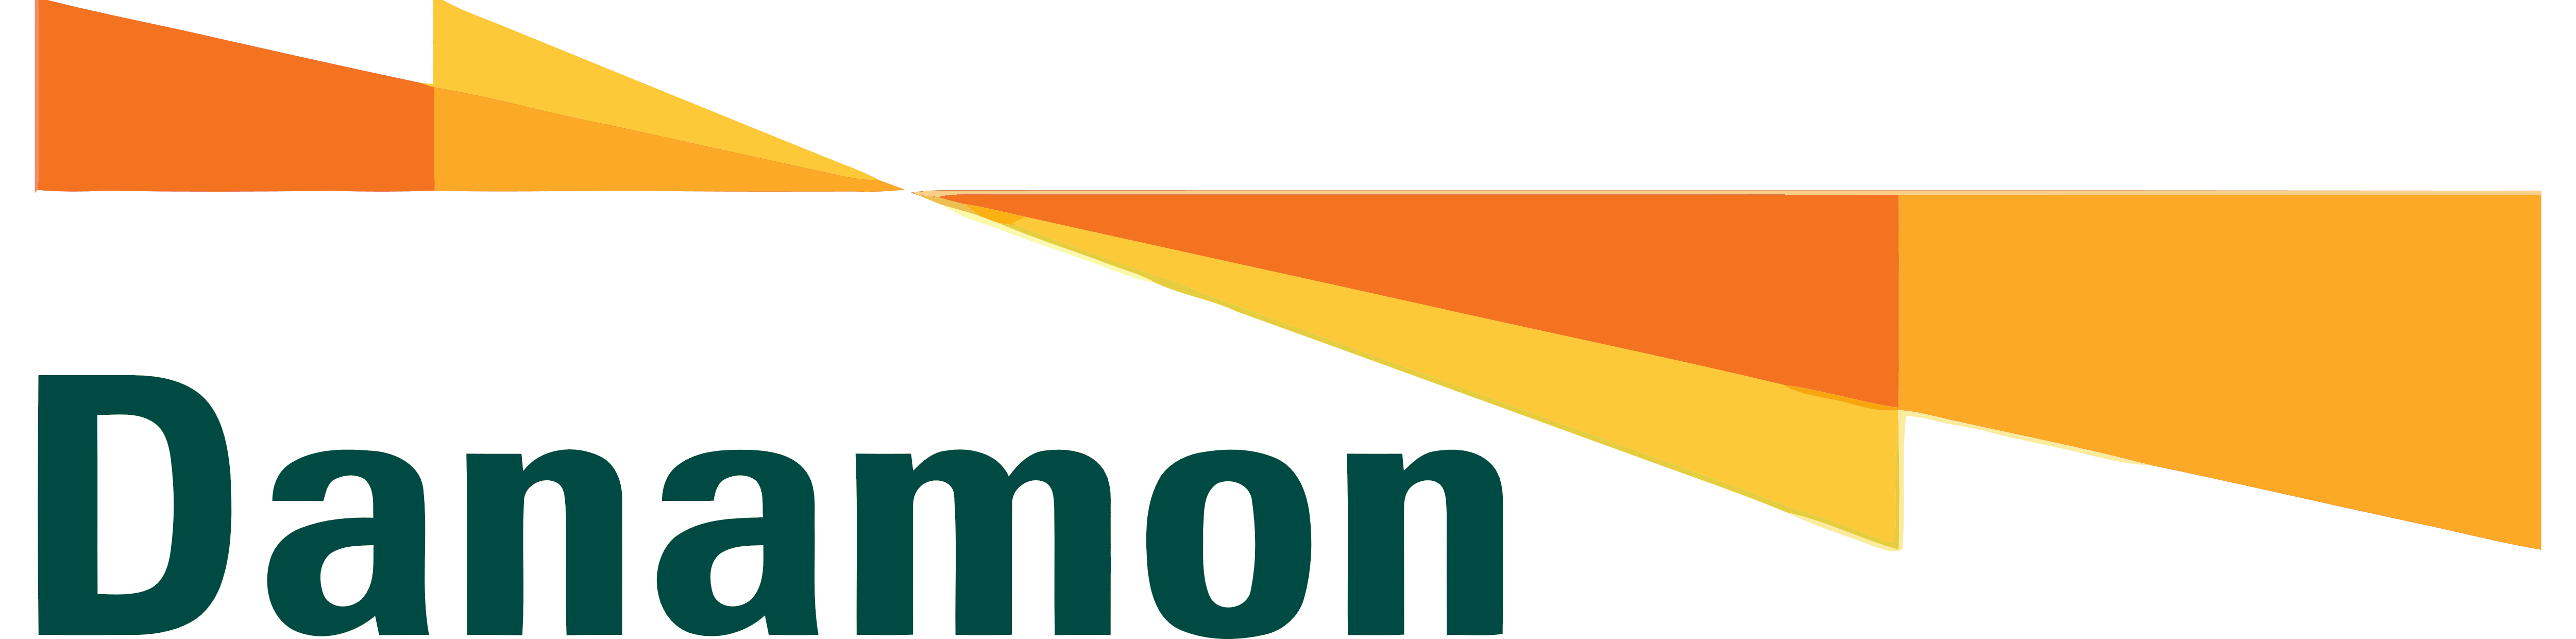 Danamon Online Bisnis Danamon bank officer logo indonesia account relationship directory oliver jones